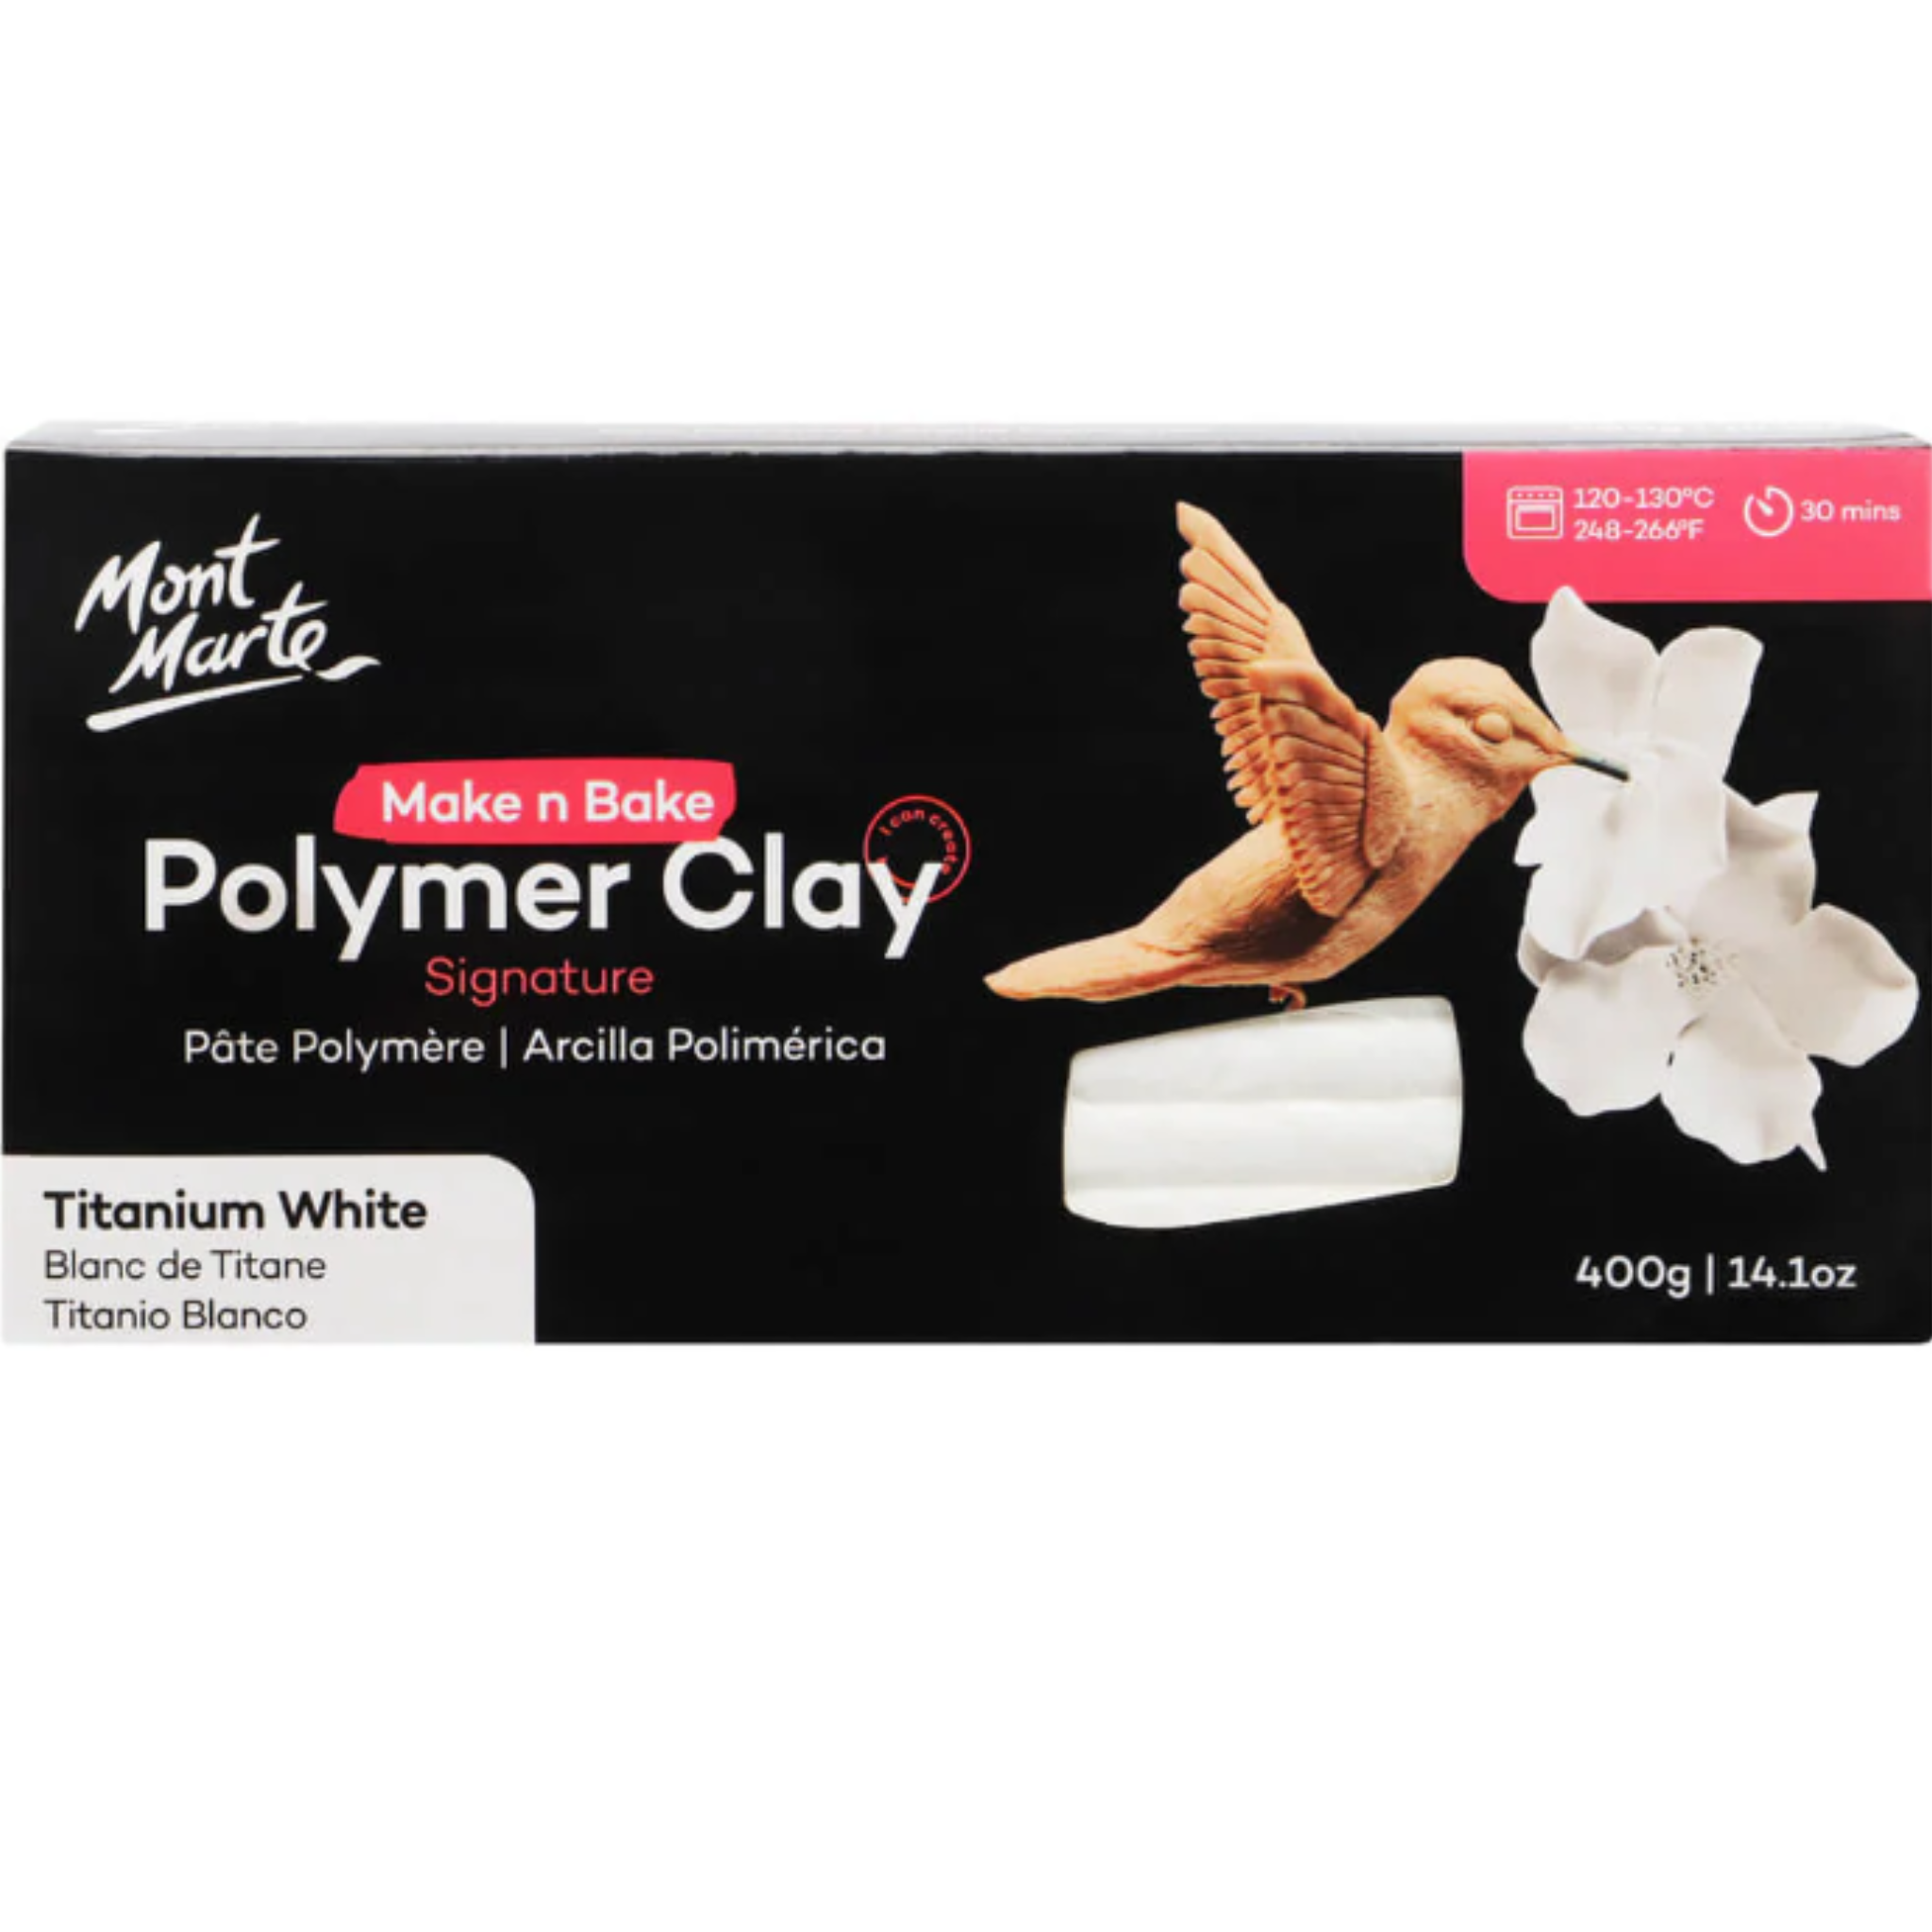 Make n Bake Polymer Clay Signature 400g (14.1oz) - Titanium White